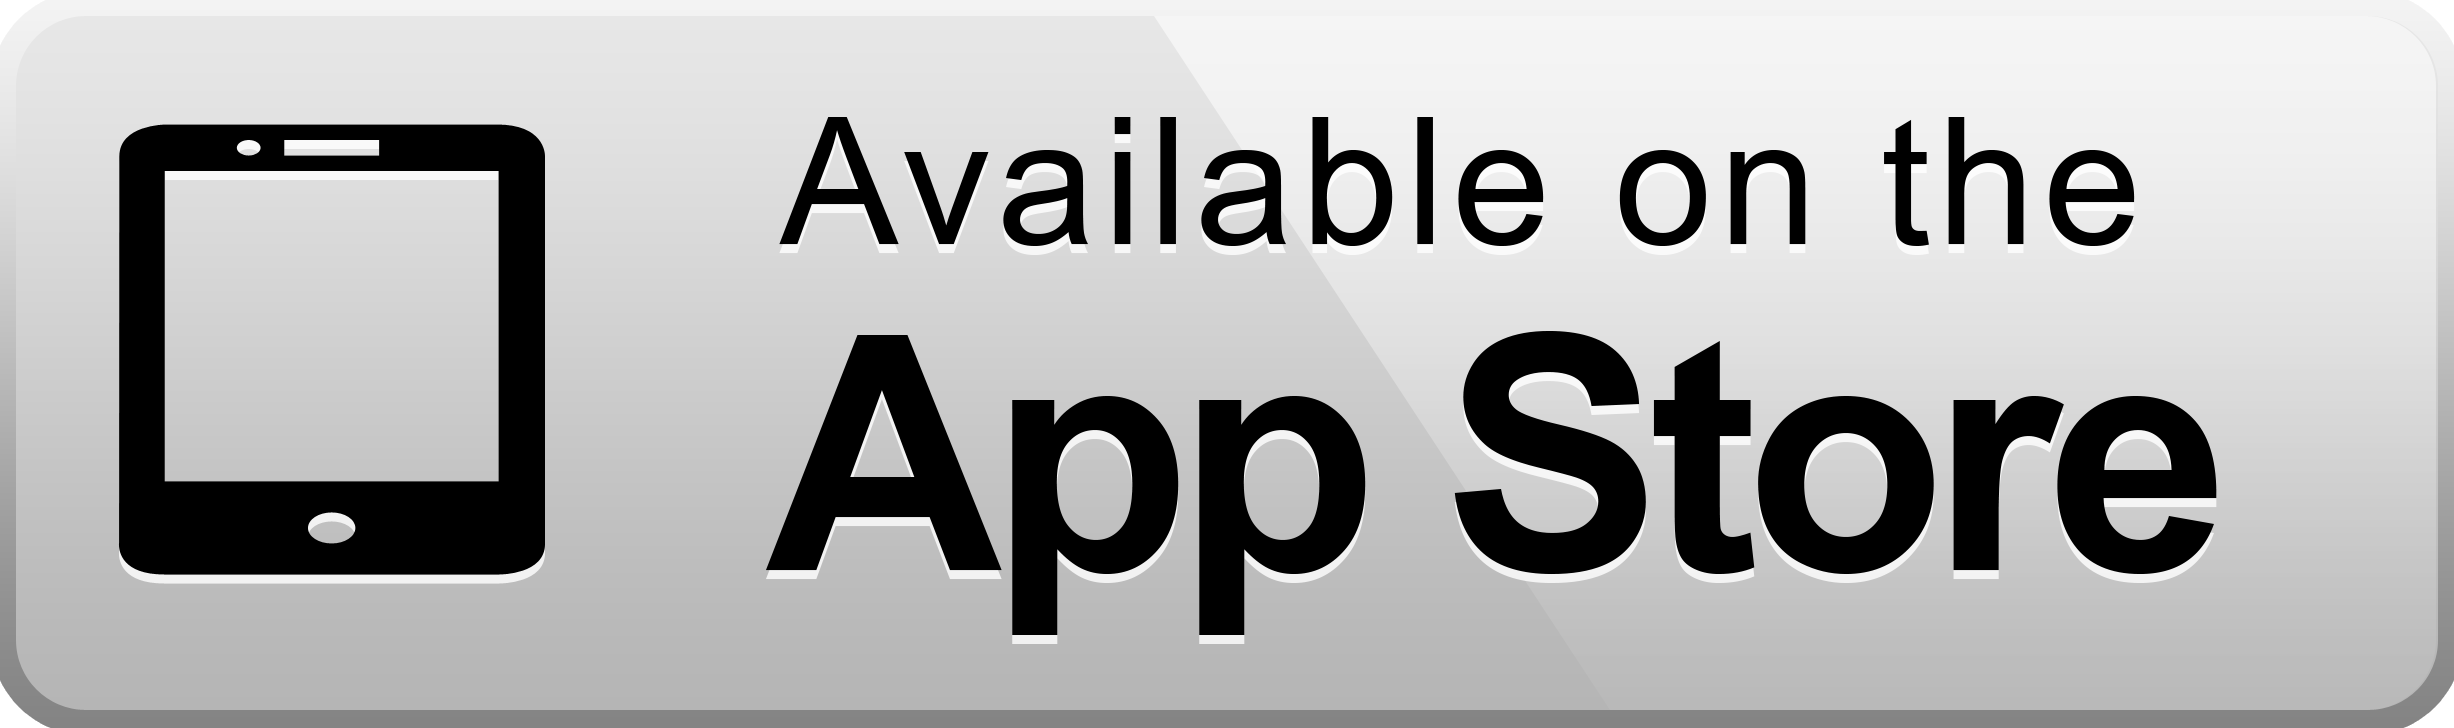 Иконка app Store. Доступно в app Store. Загрузите в app Store. Значок доступно в app Store. 100 available